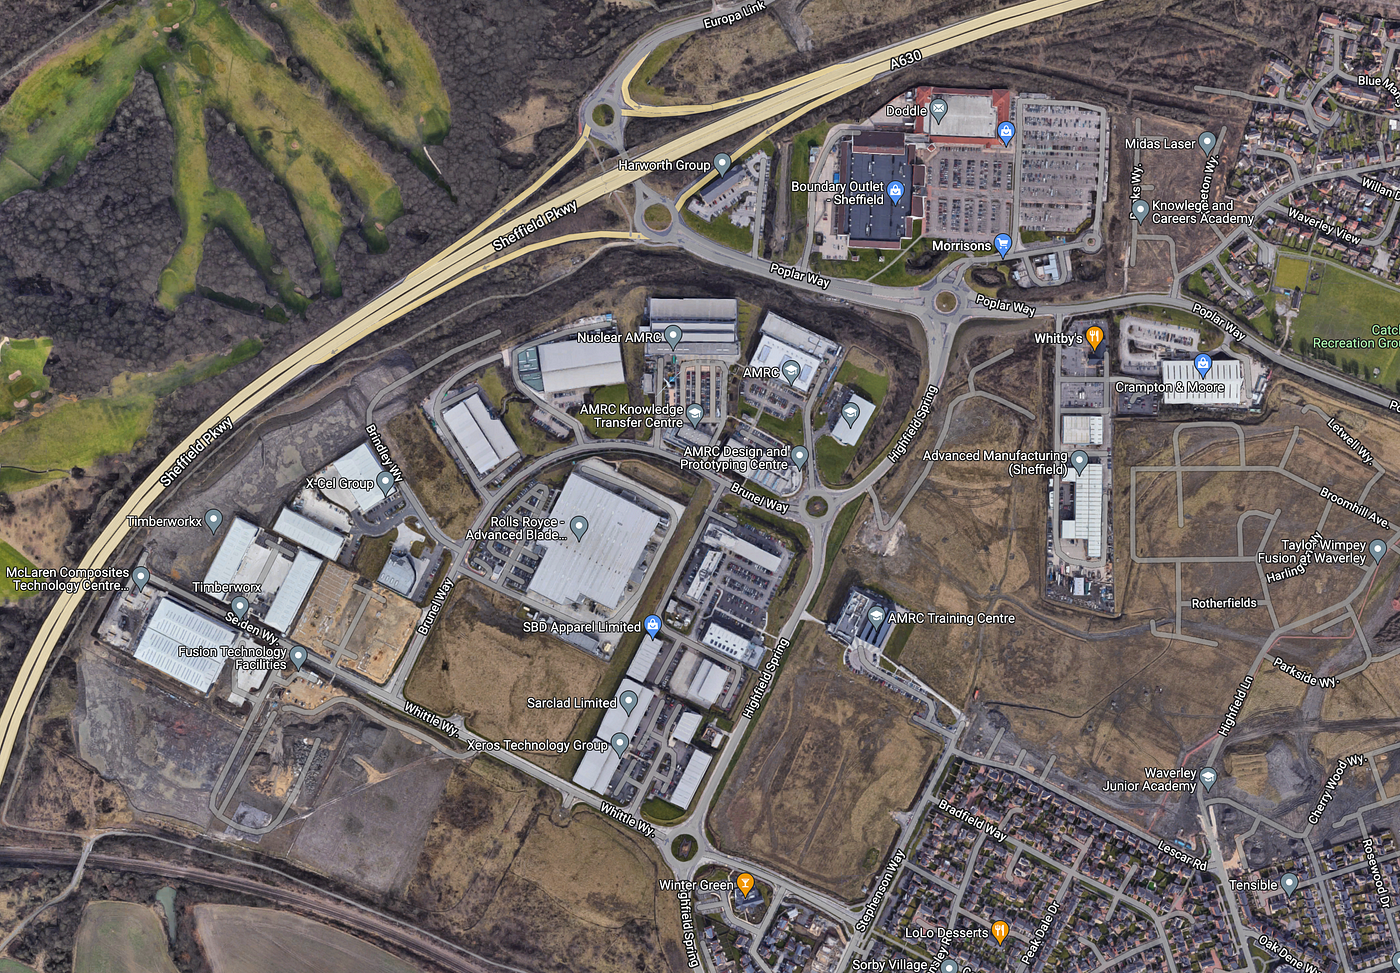 Development of former Pruitt-Igoe site, near St. Louis' new NGA campus,  advances